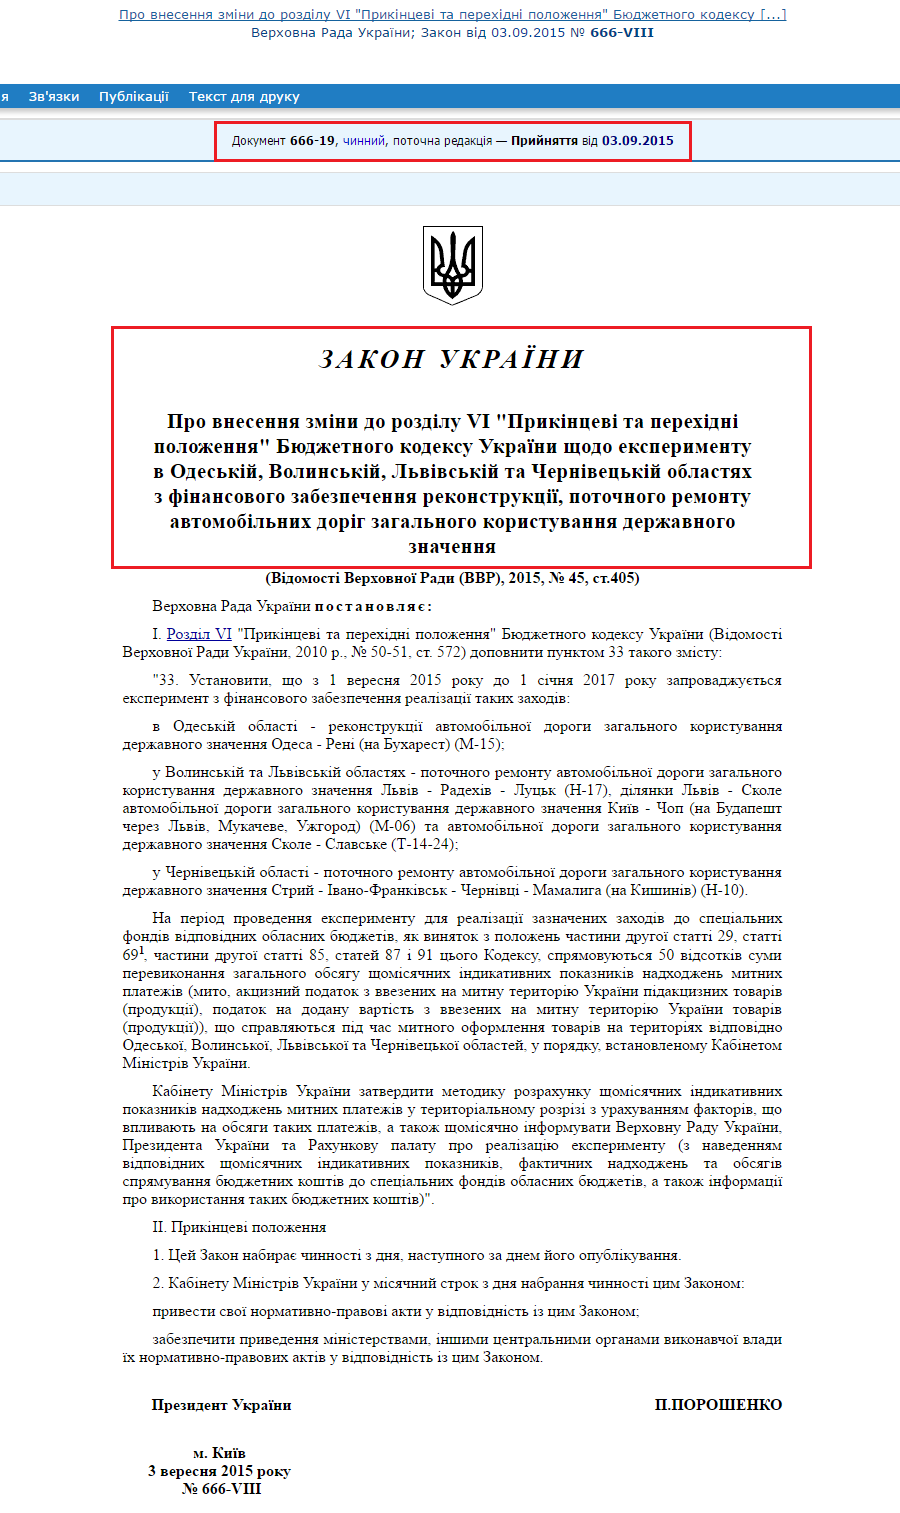 http://zakon3.rada.gov.ua/laws/show/666-viii